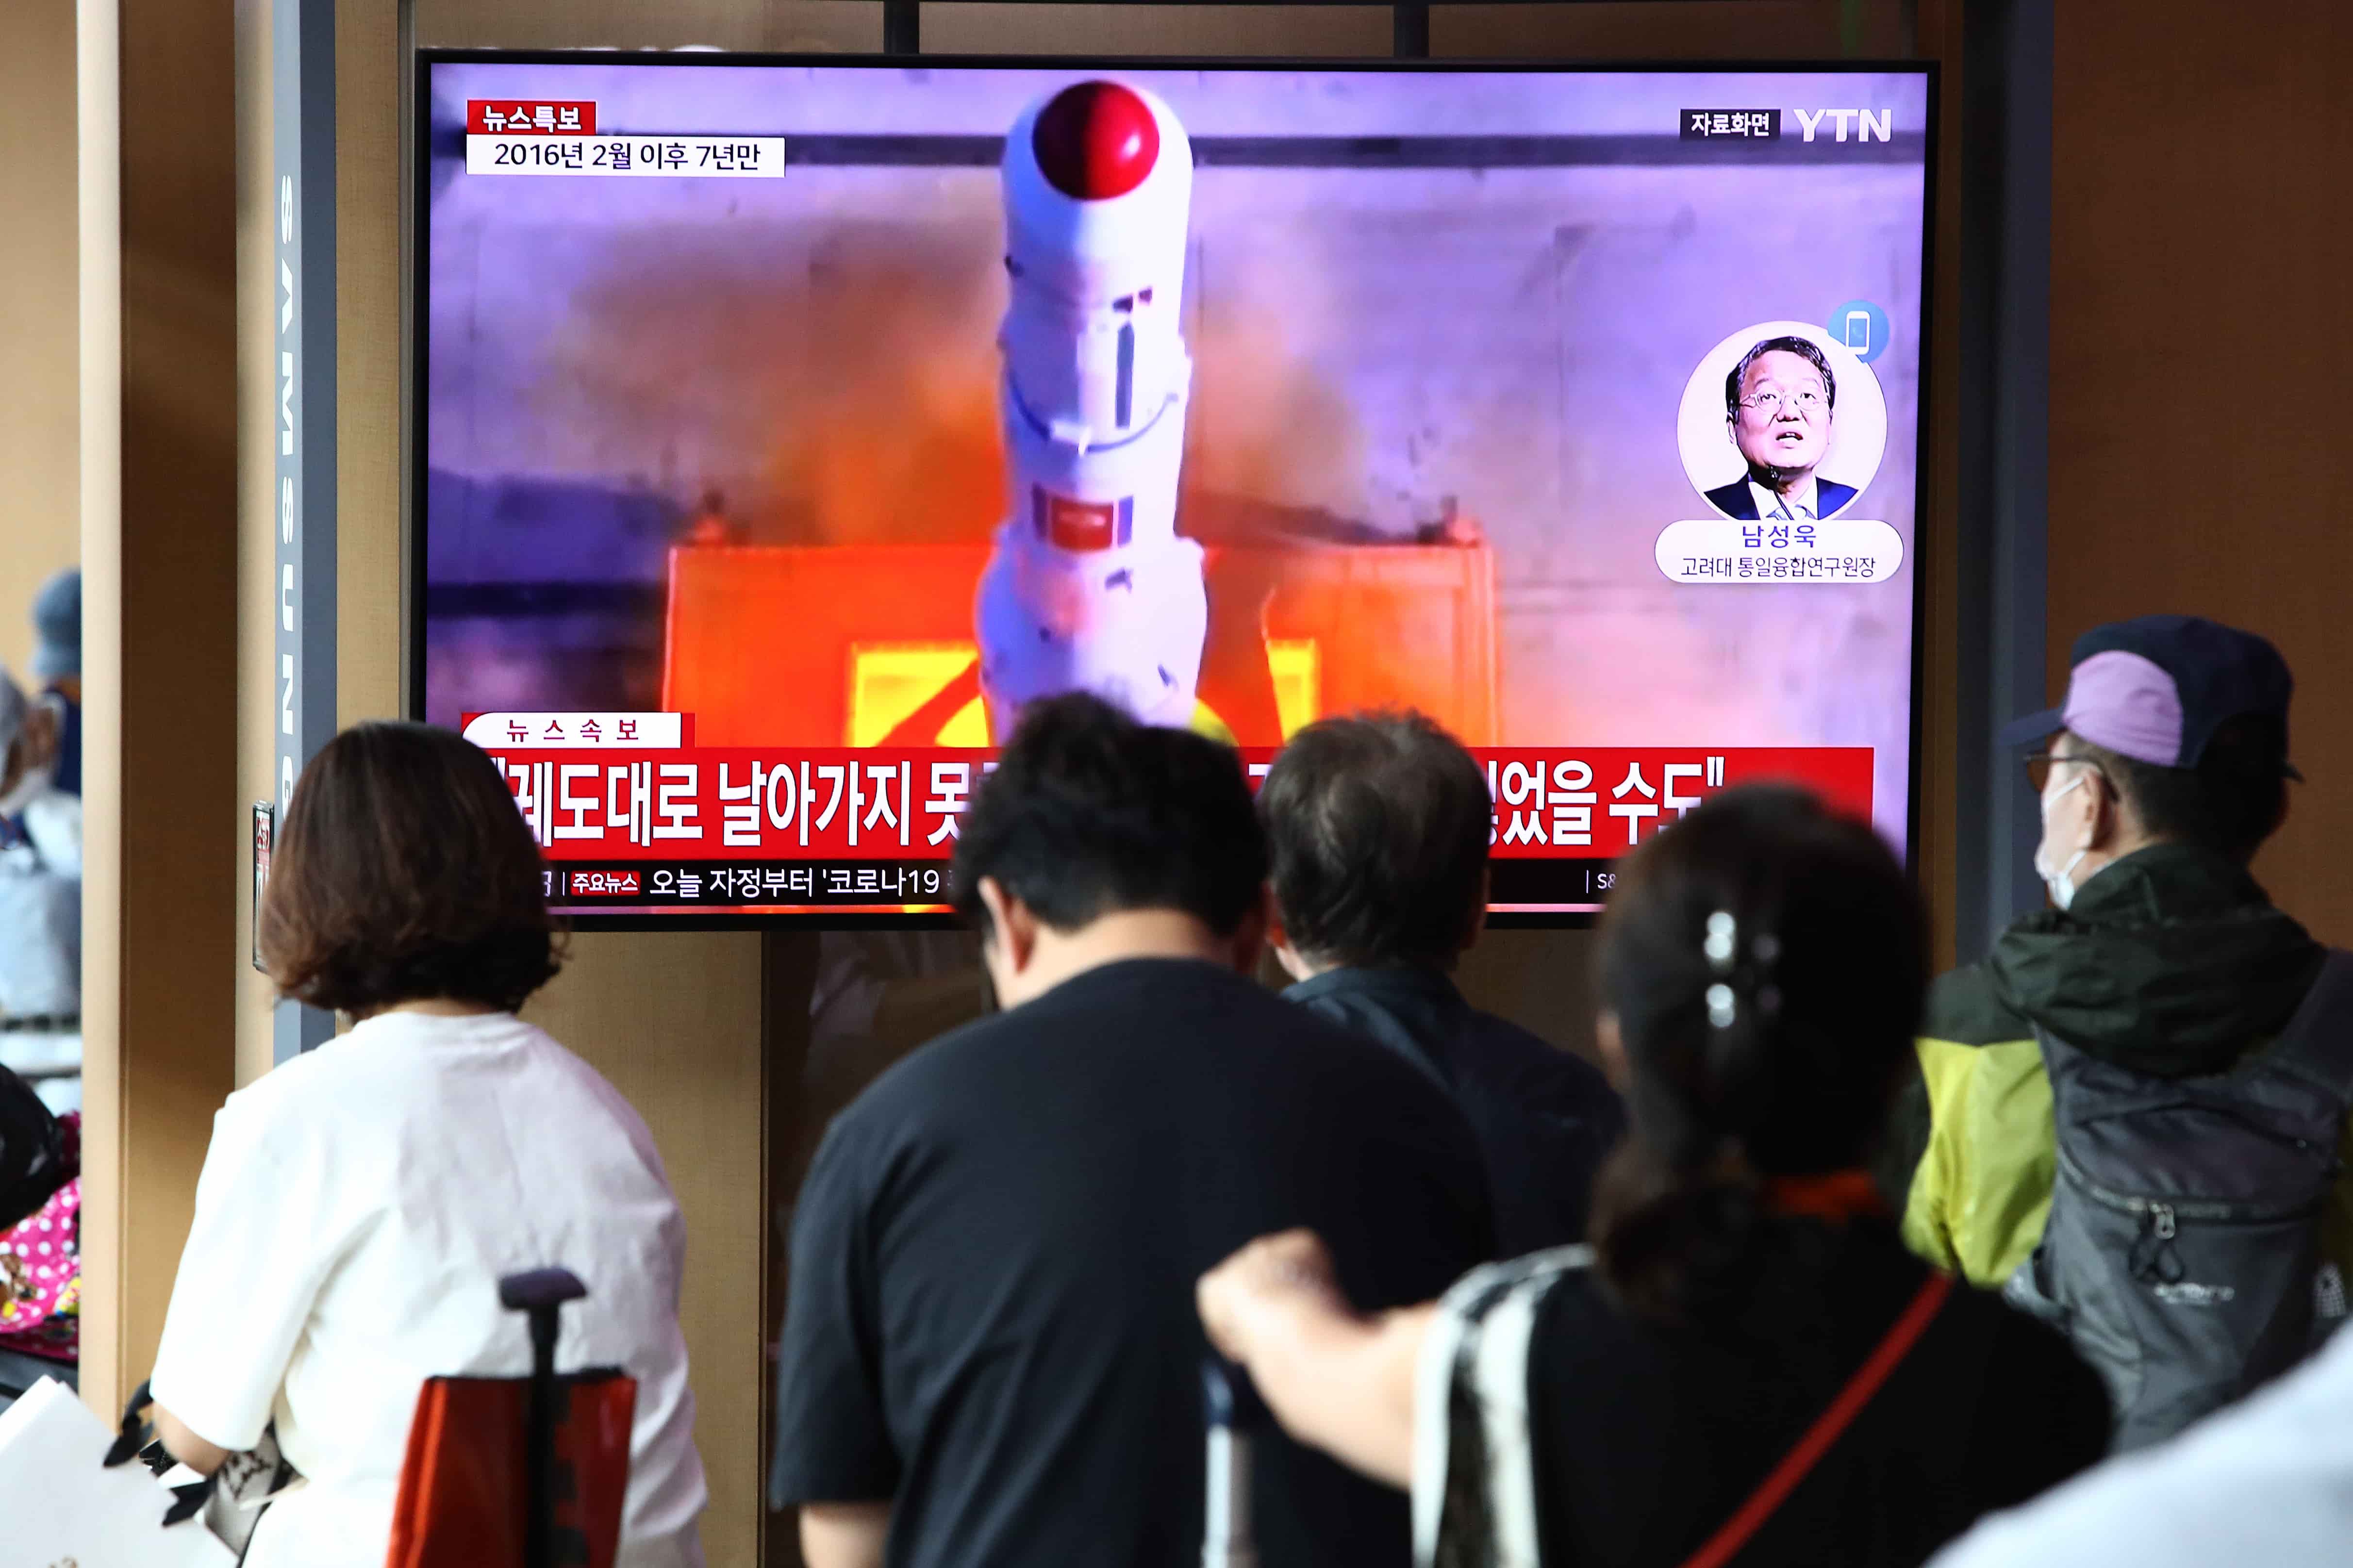 NKorea Tests Ballistic Missiles as Blinken Visits Seoul